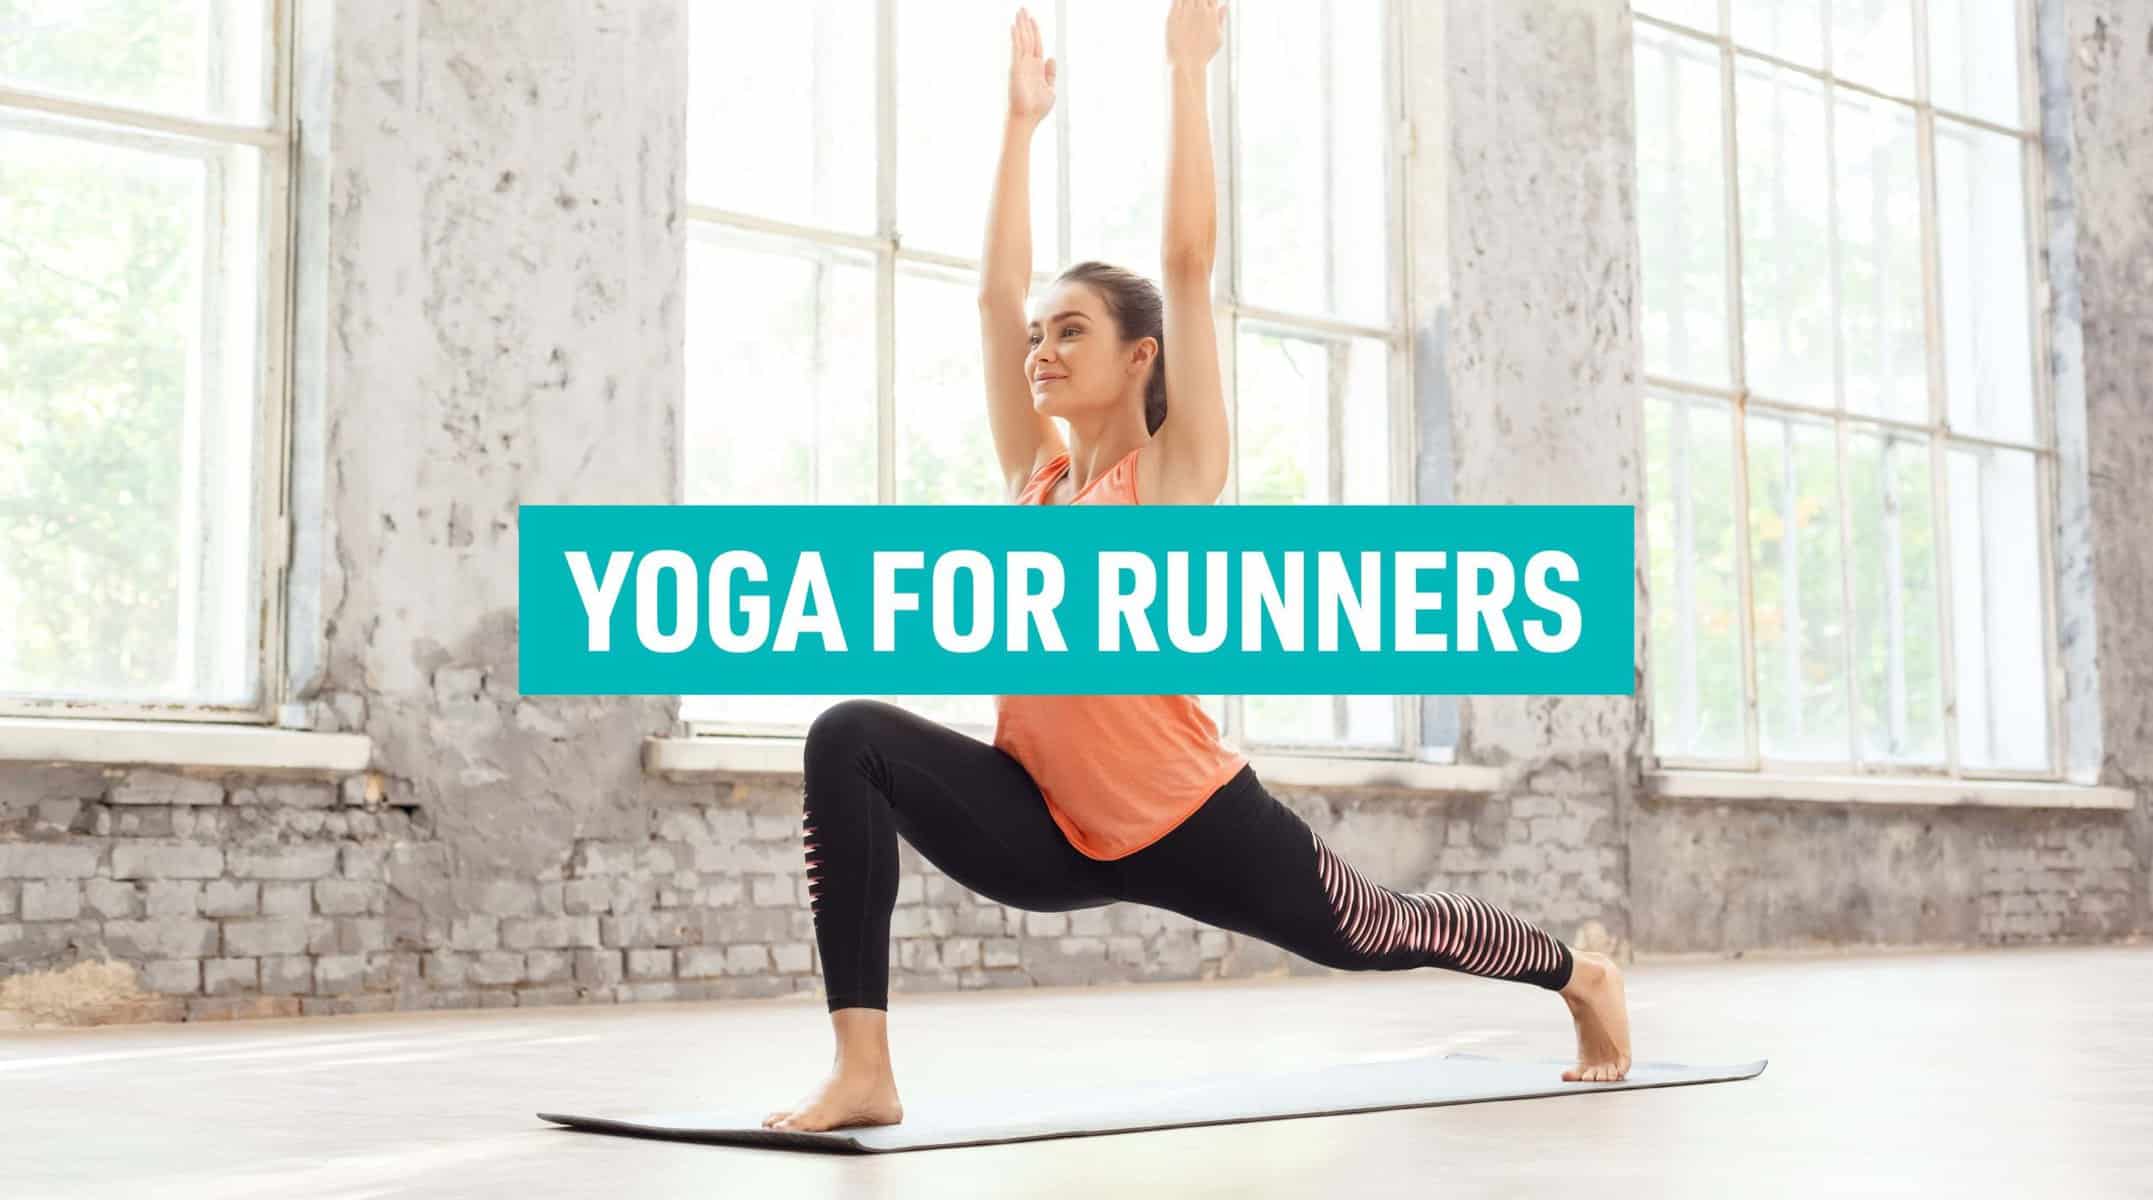 Yoga for Runners